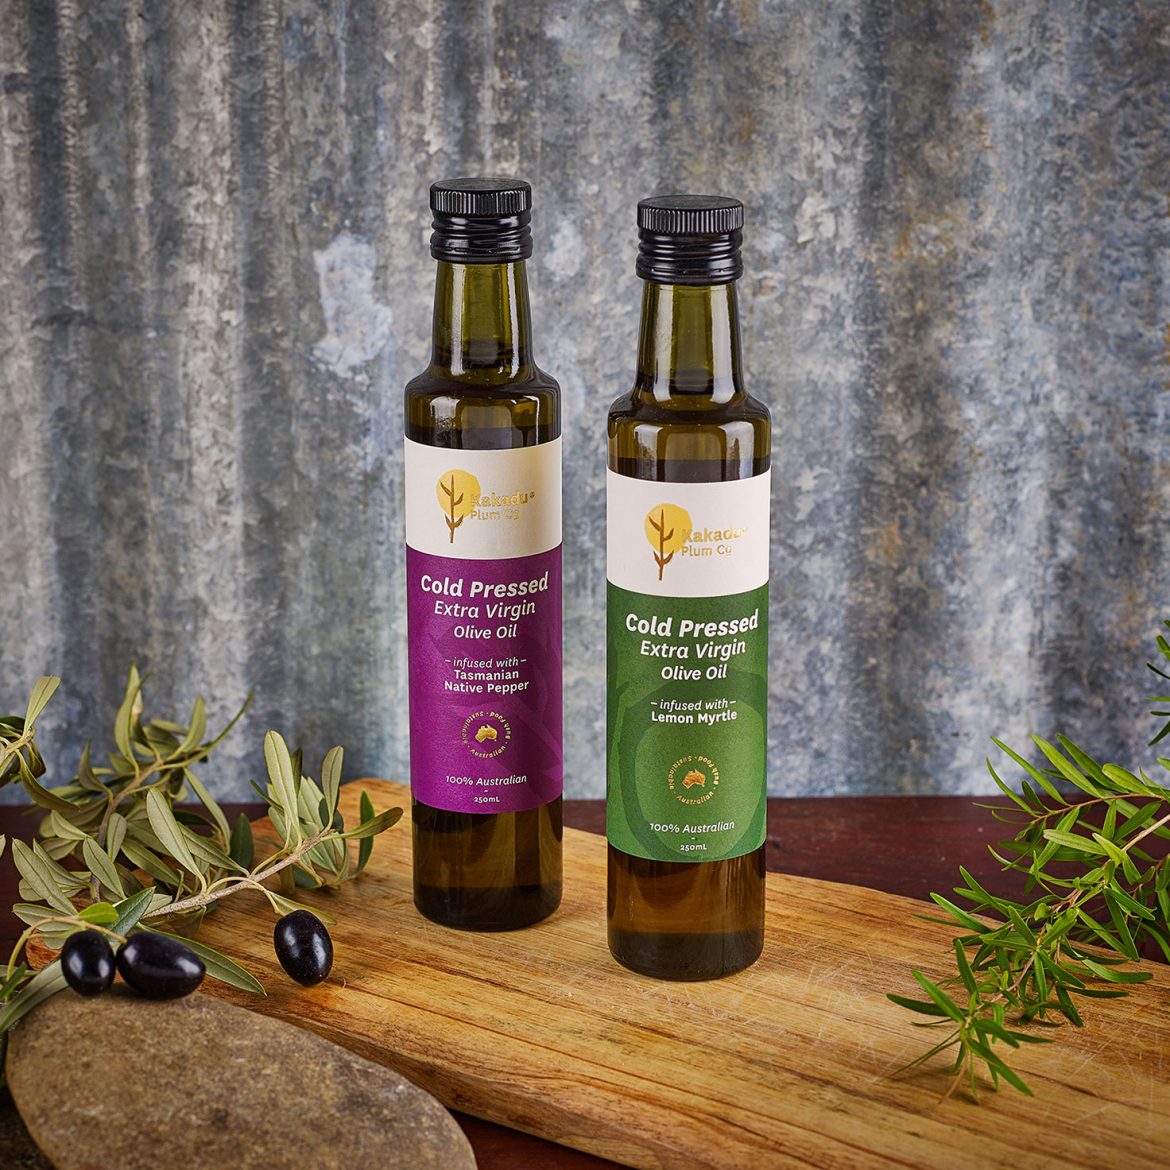 Kakadu Plum Co. new native Australia infused olive oils